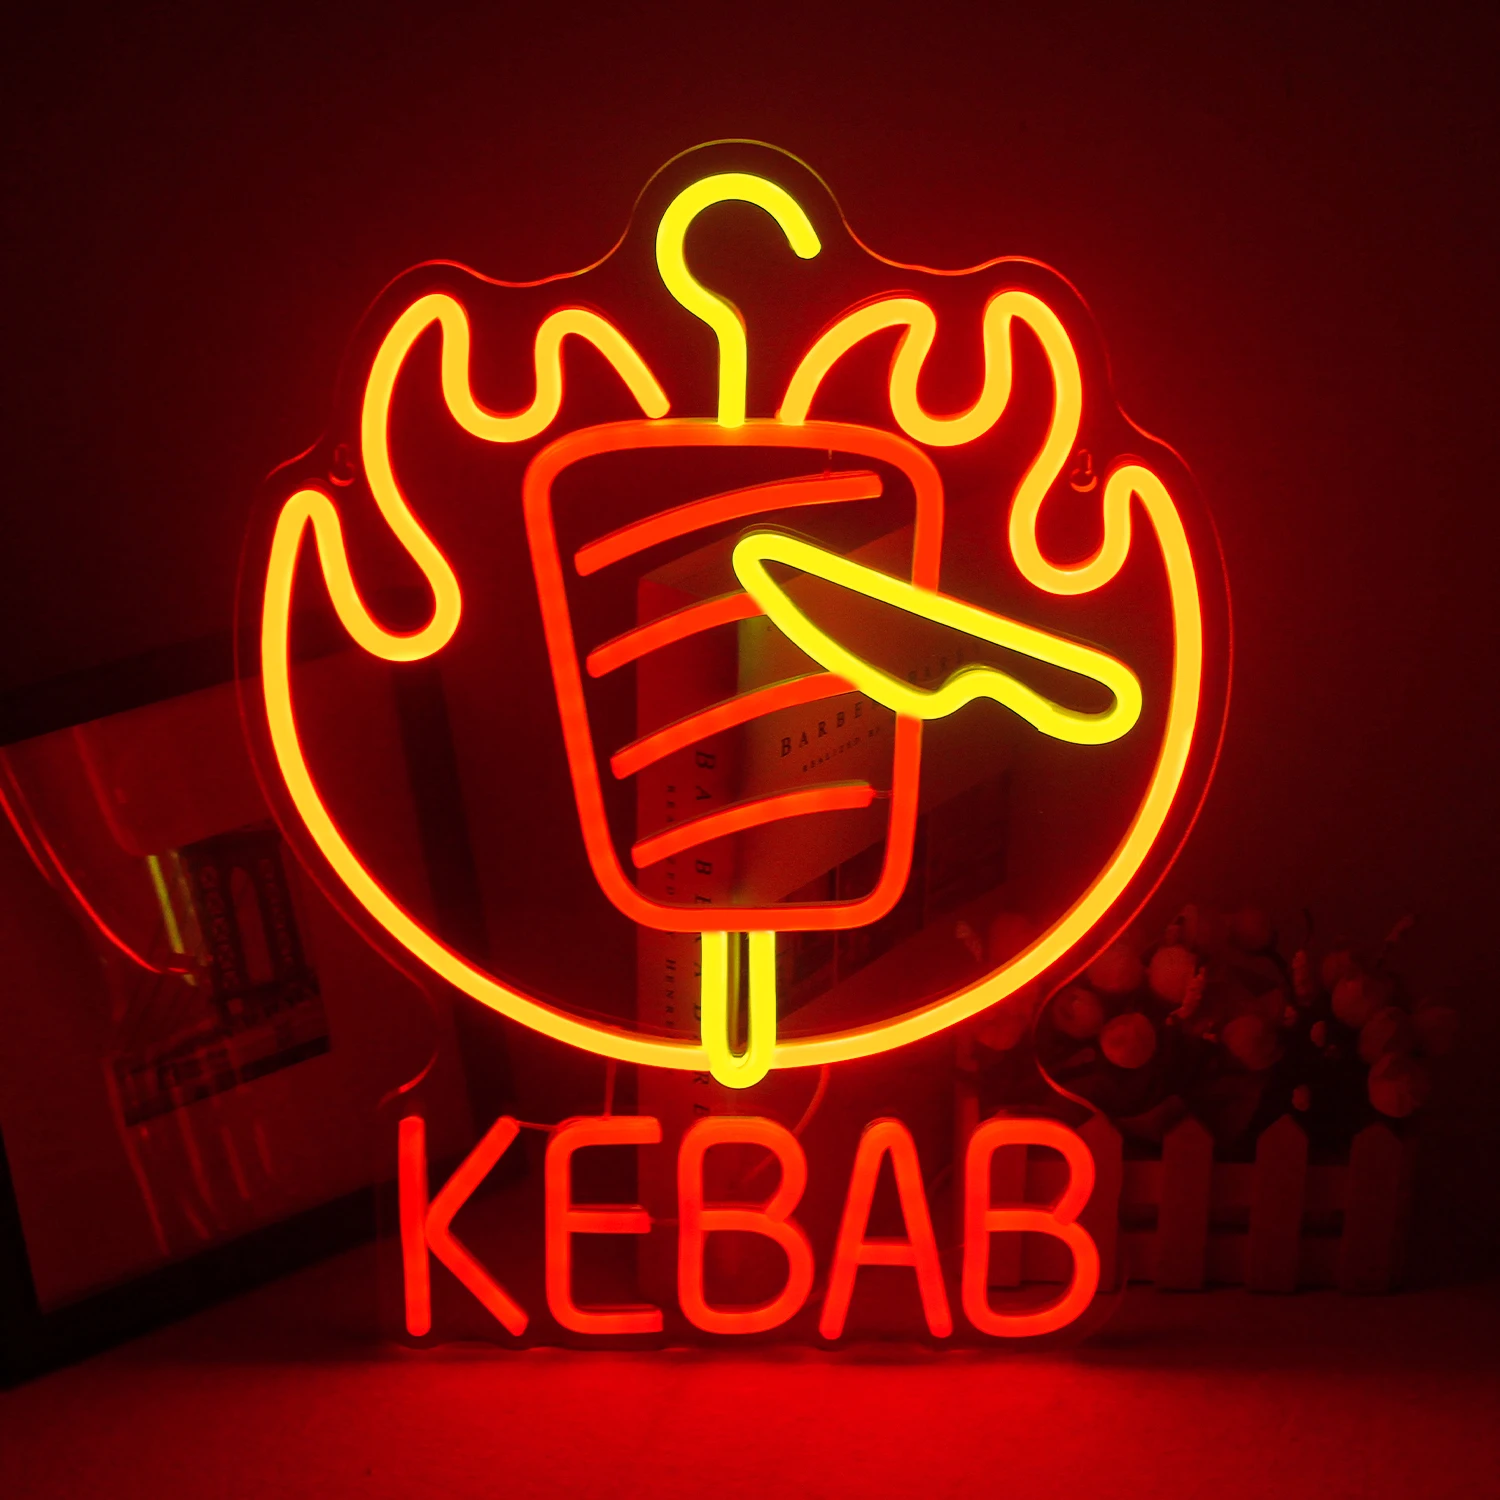 

Kebab LED Neon Sign Acrylic Handmade Led Light Neon for Shop Window Store Display Beer Bar Nightclub Party Wall Decor Light